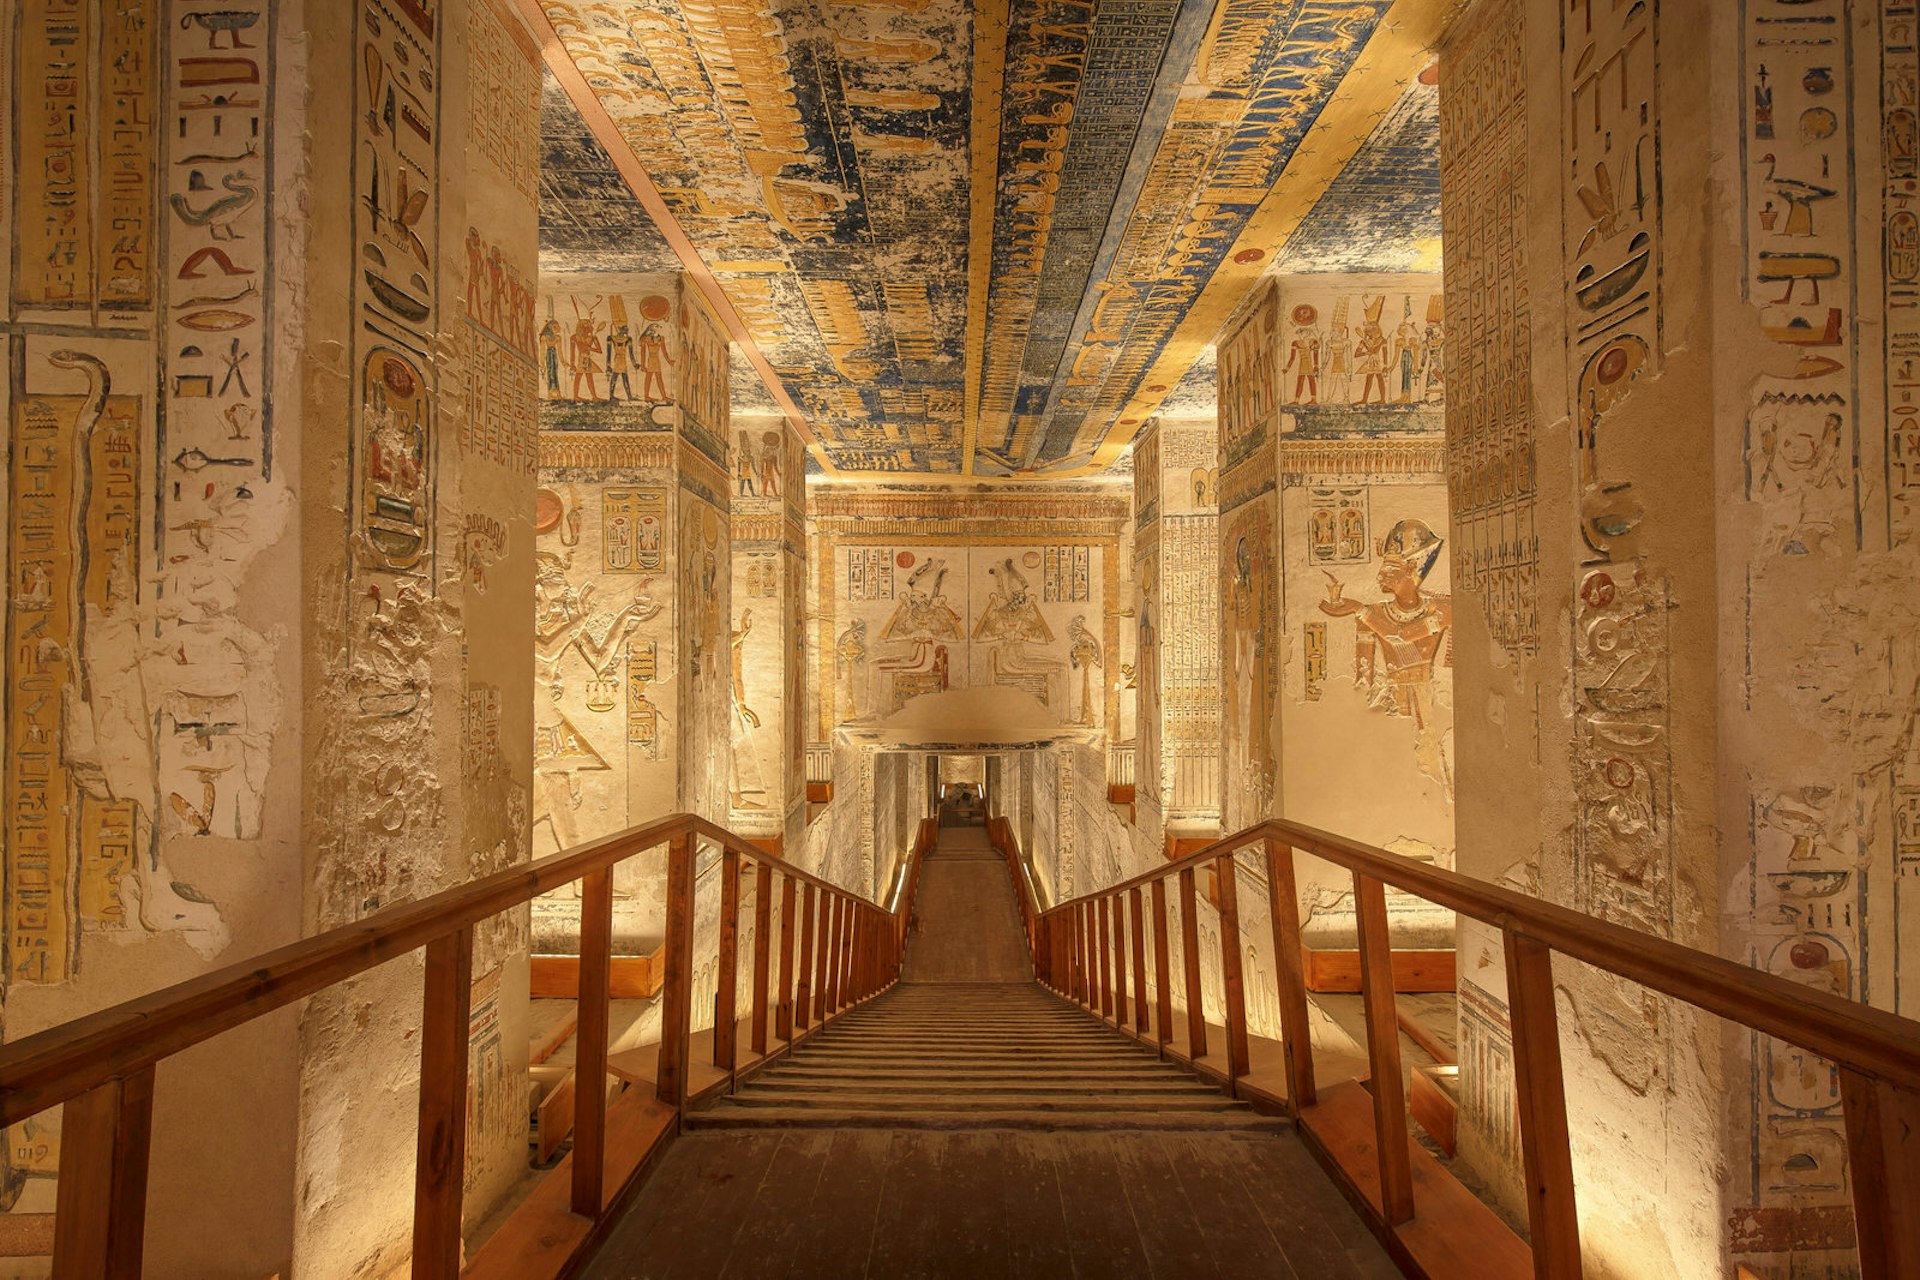 Ramses VI tomb in Valley of the Kings. Image by Jakub Kyncl / Shutterstock